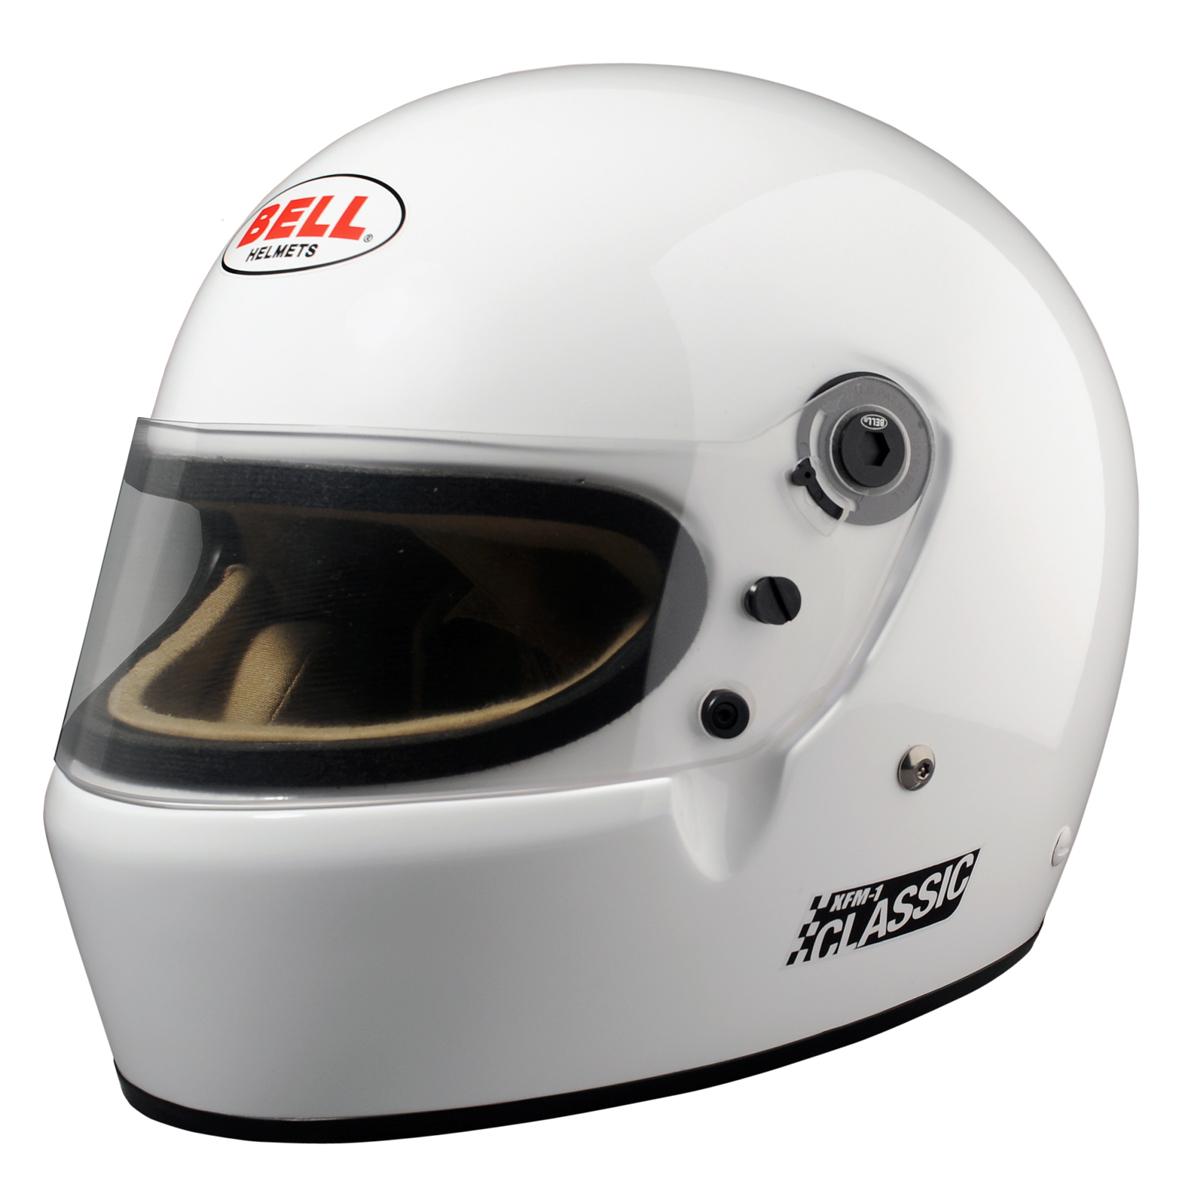  Bell  XFM 1 Classic  Full Face Motorsport Helmet from Merlin 